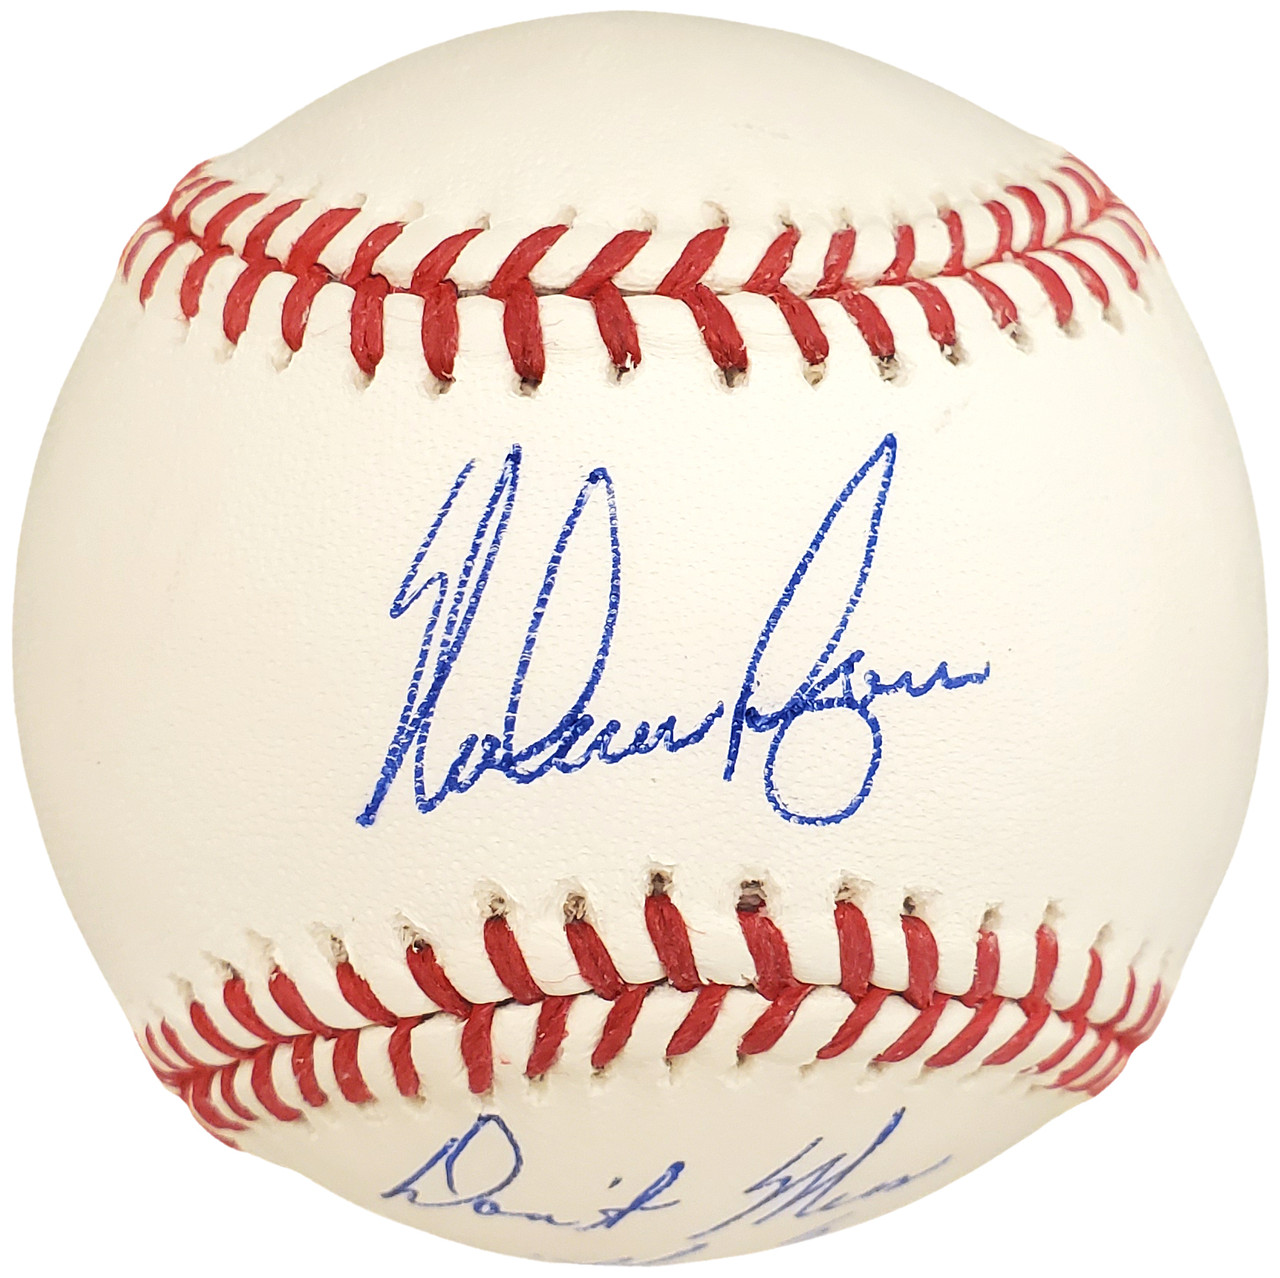 Fanatics Authentic Nolan Ryan Texas Rangers Autographed Baseball with 5714 K's Inscription